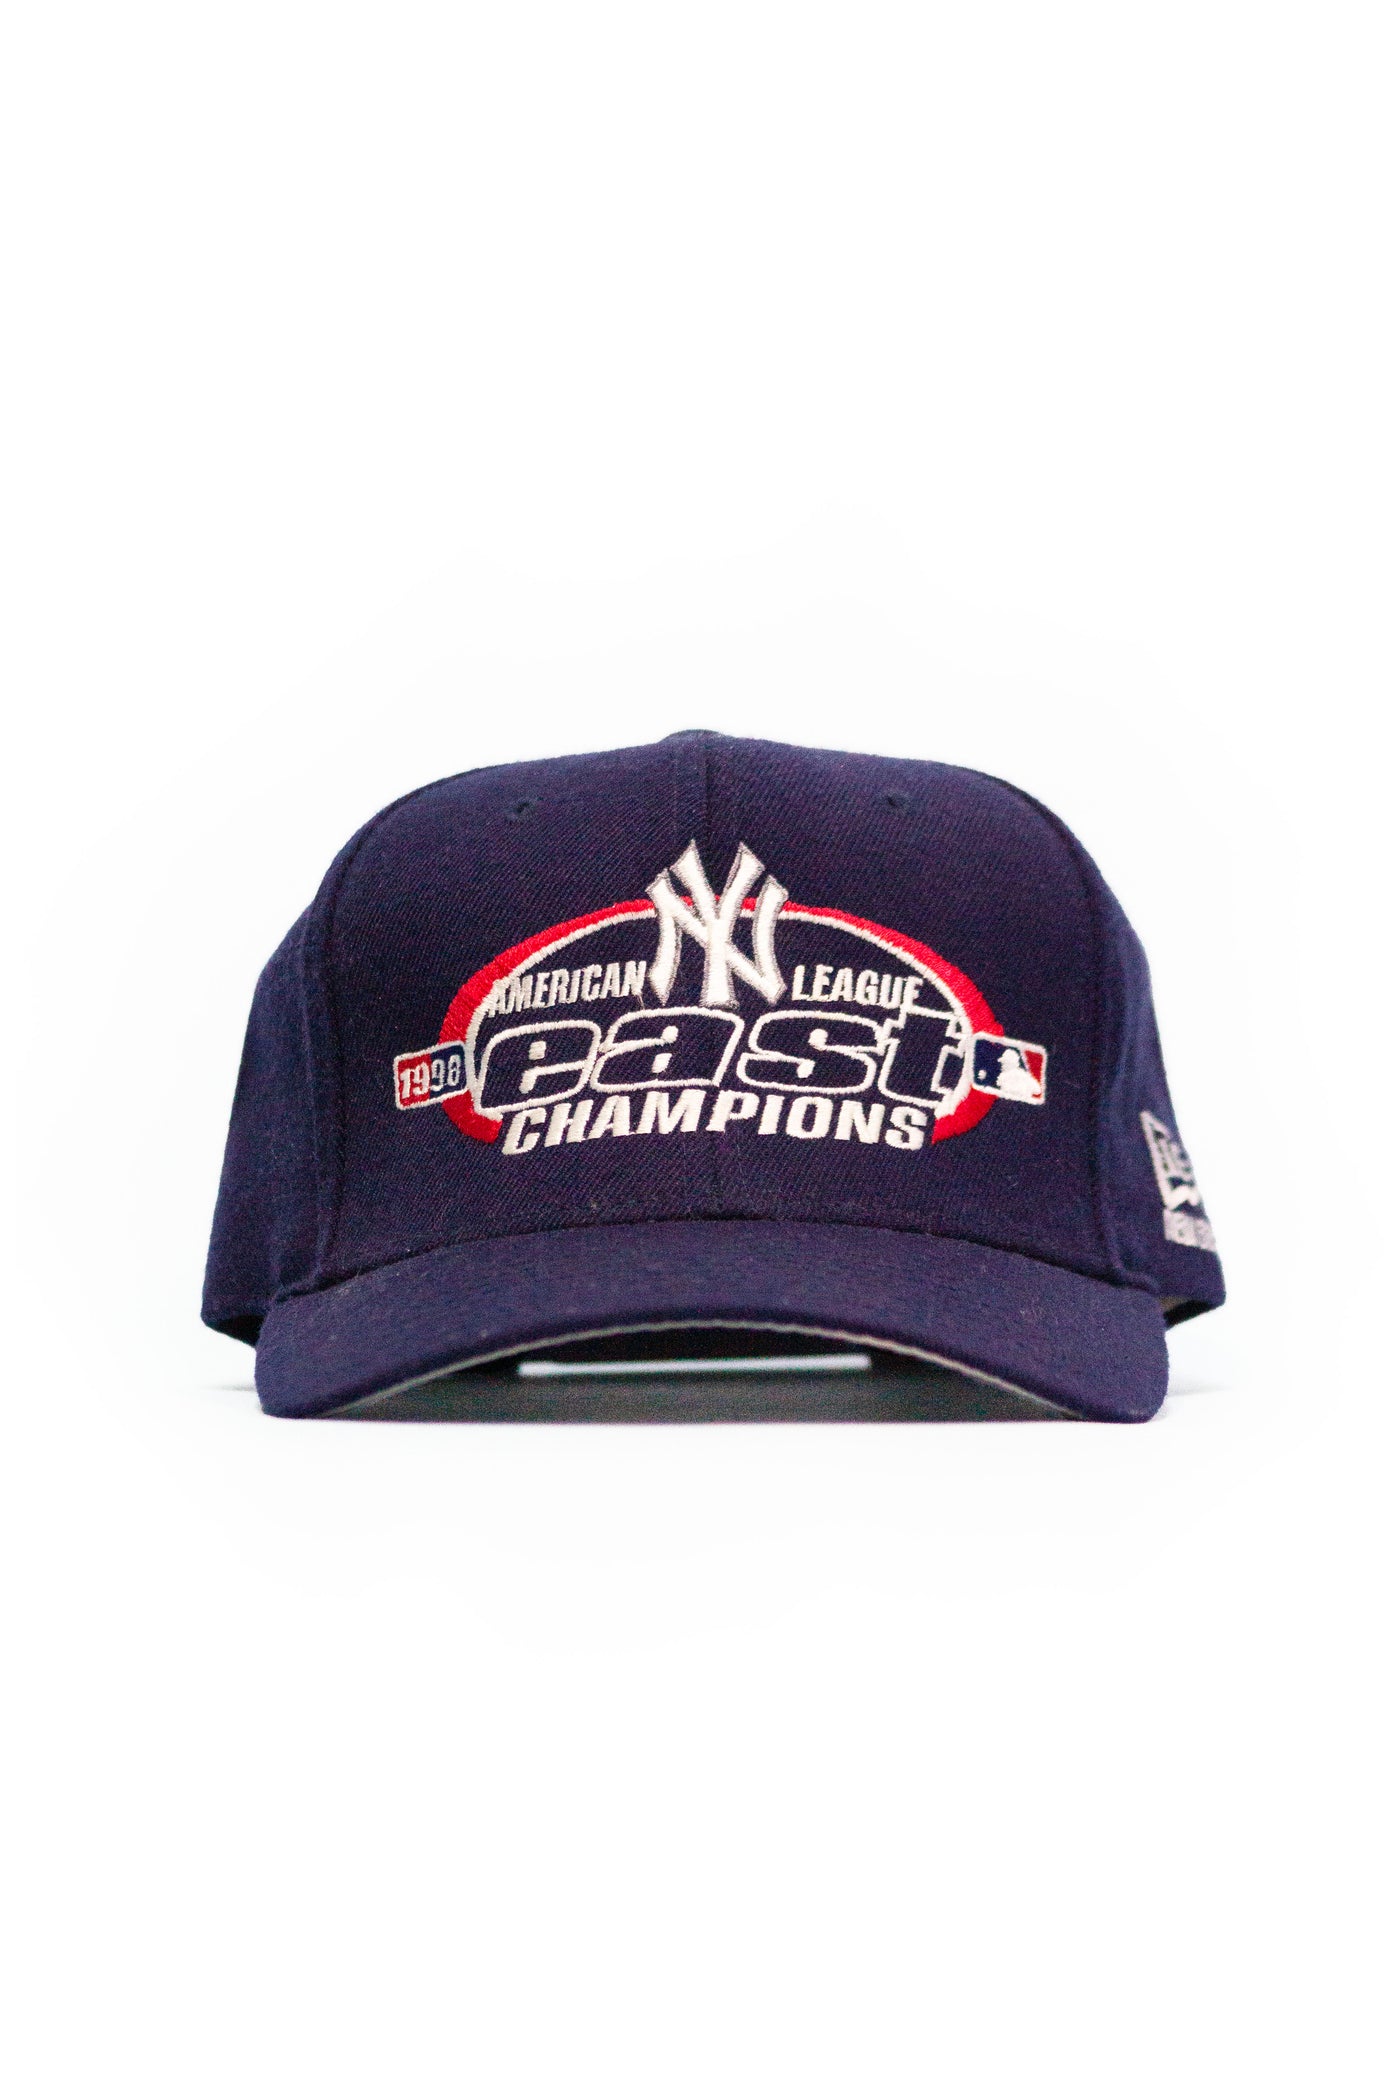 Vintage 1998 Yankees AL East Champs Snapback